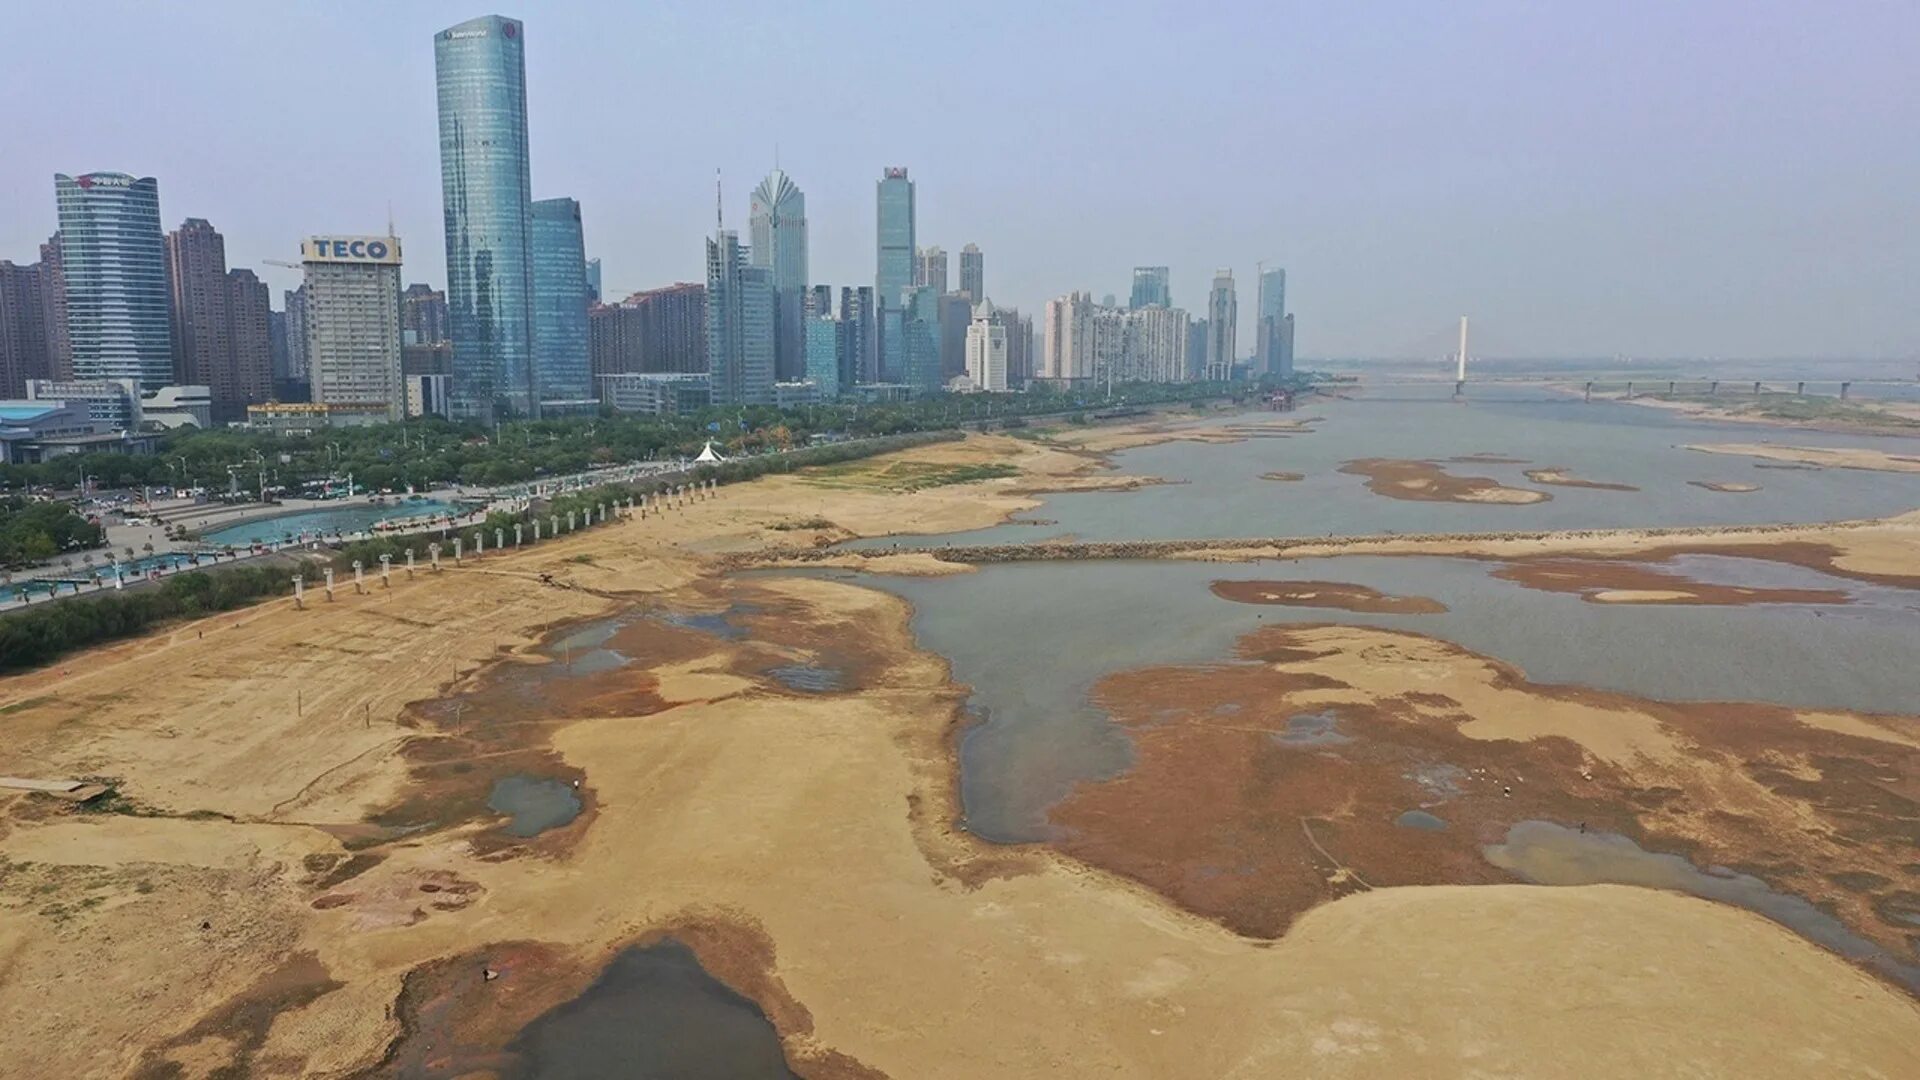 Река янцзы пересохла. Янцзы обмелела. Река Янцзы высыхает. Засуха в Китае 2010. Китайская река Янцзы пересохла.